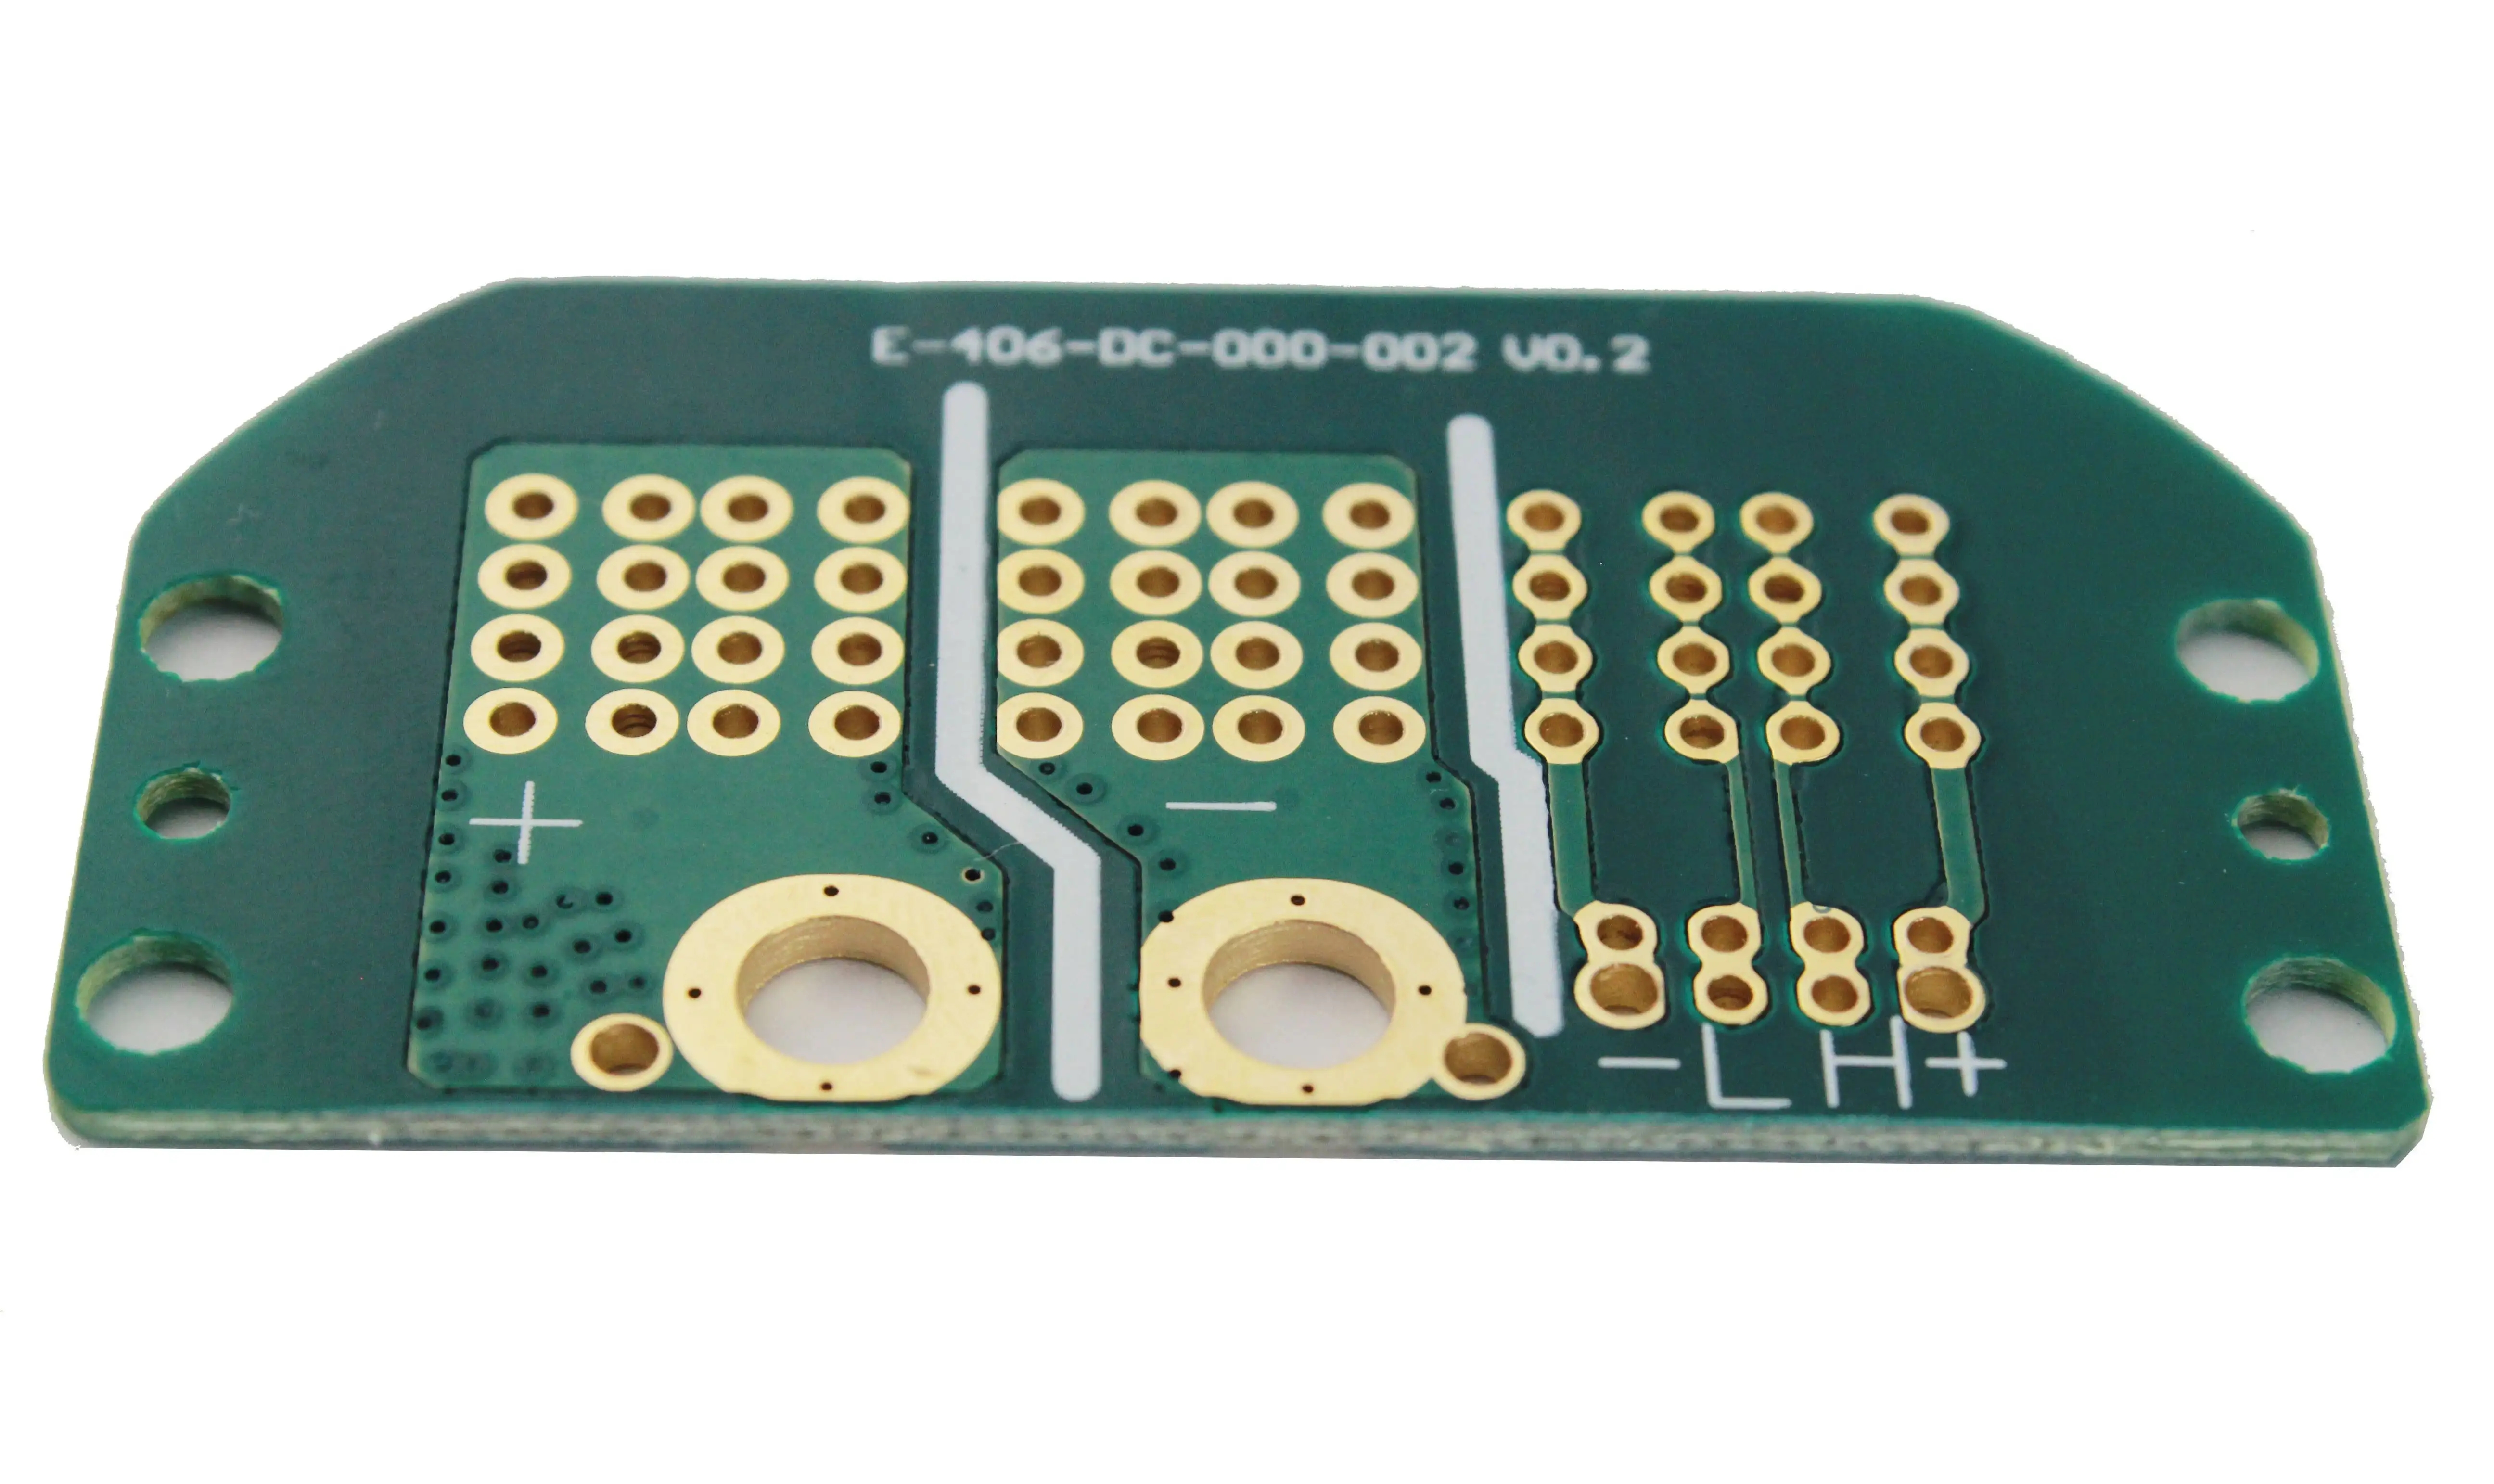 Common peripheral circuit design, hardware circuit design reference